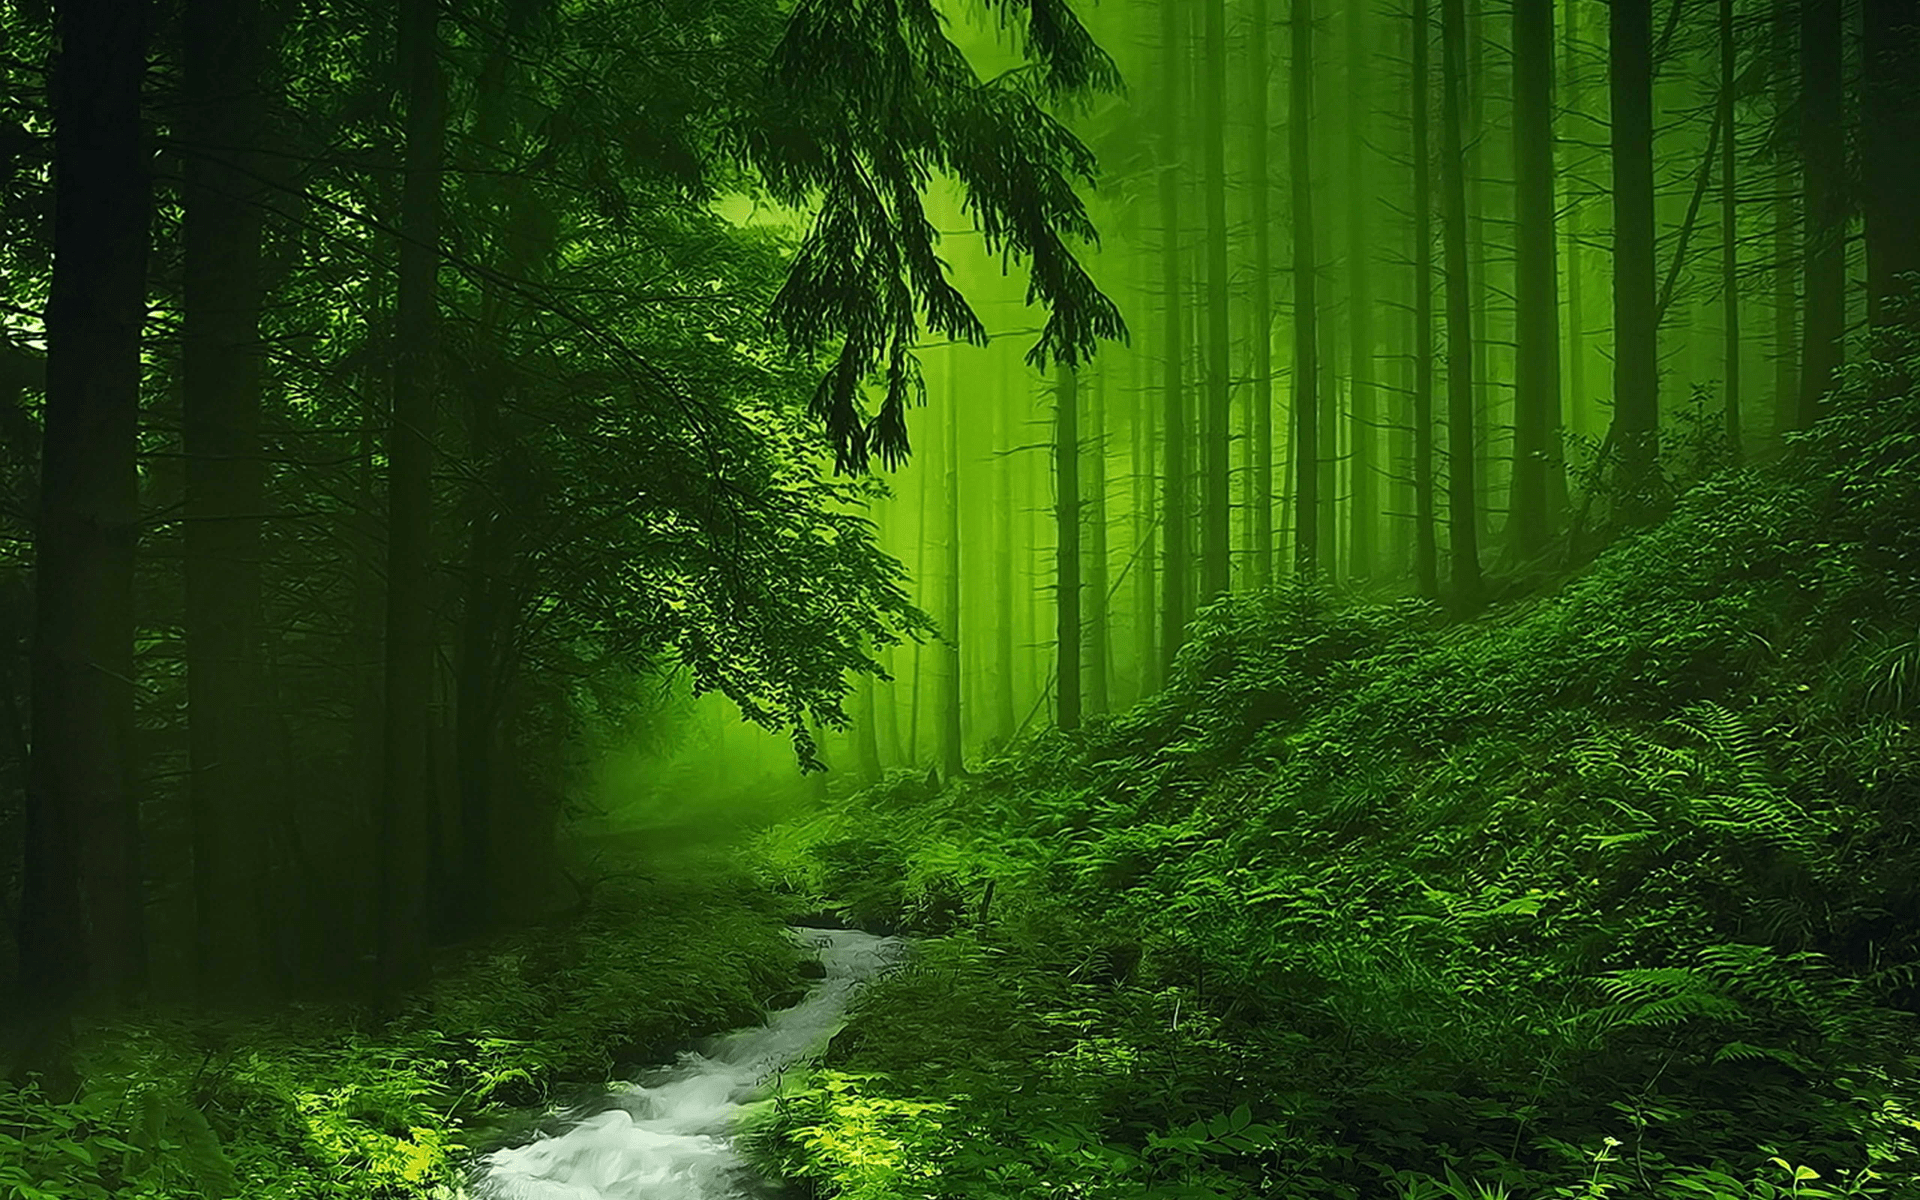 Green Scenery Desktop Wallpapers - Top Free Green Scenery Desktop